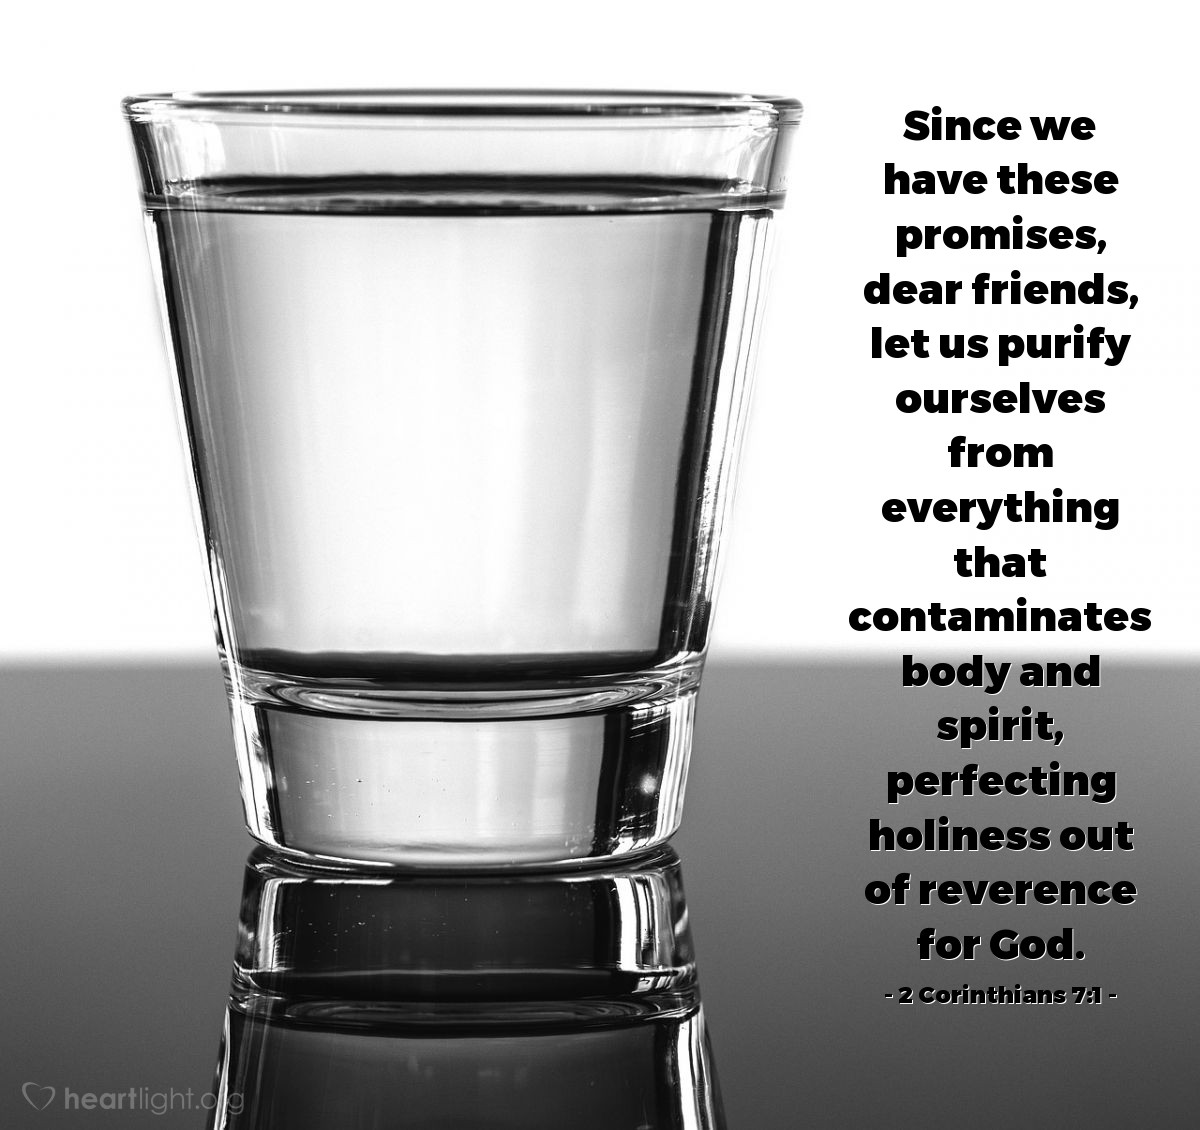 Illustration of 2 Corinthians 7:1 on Purity